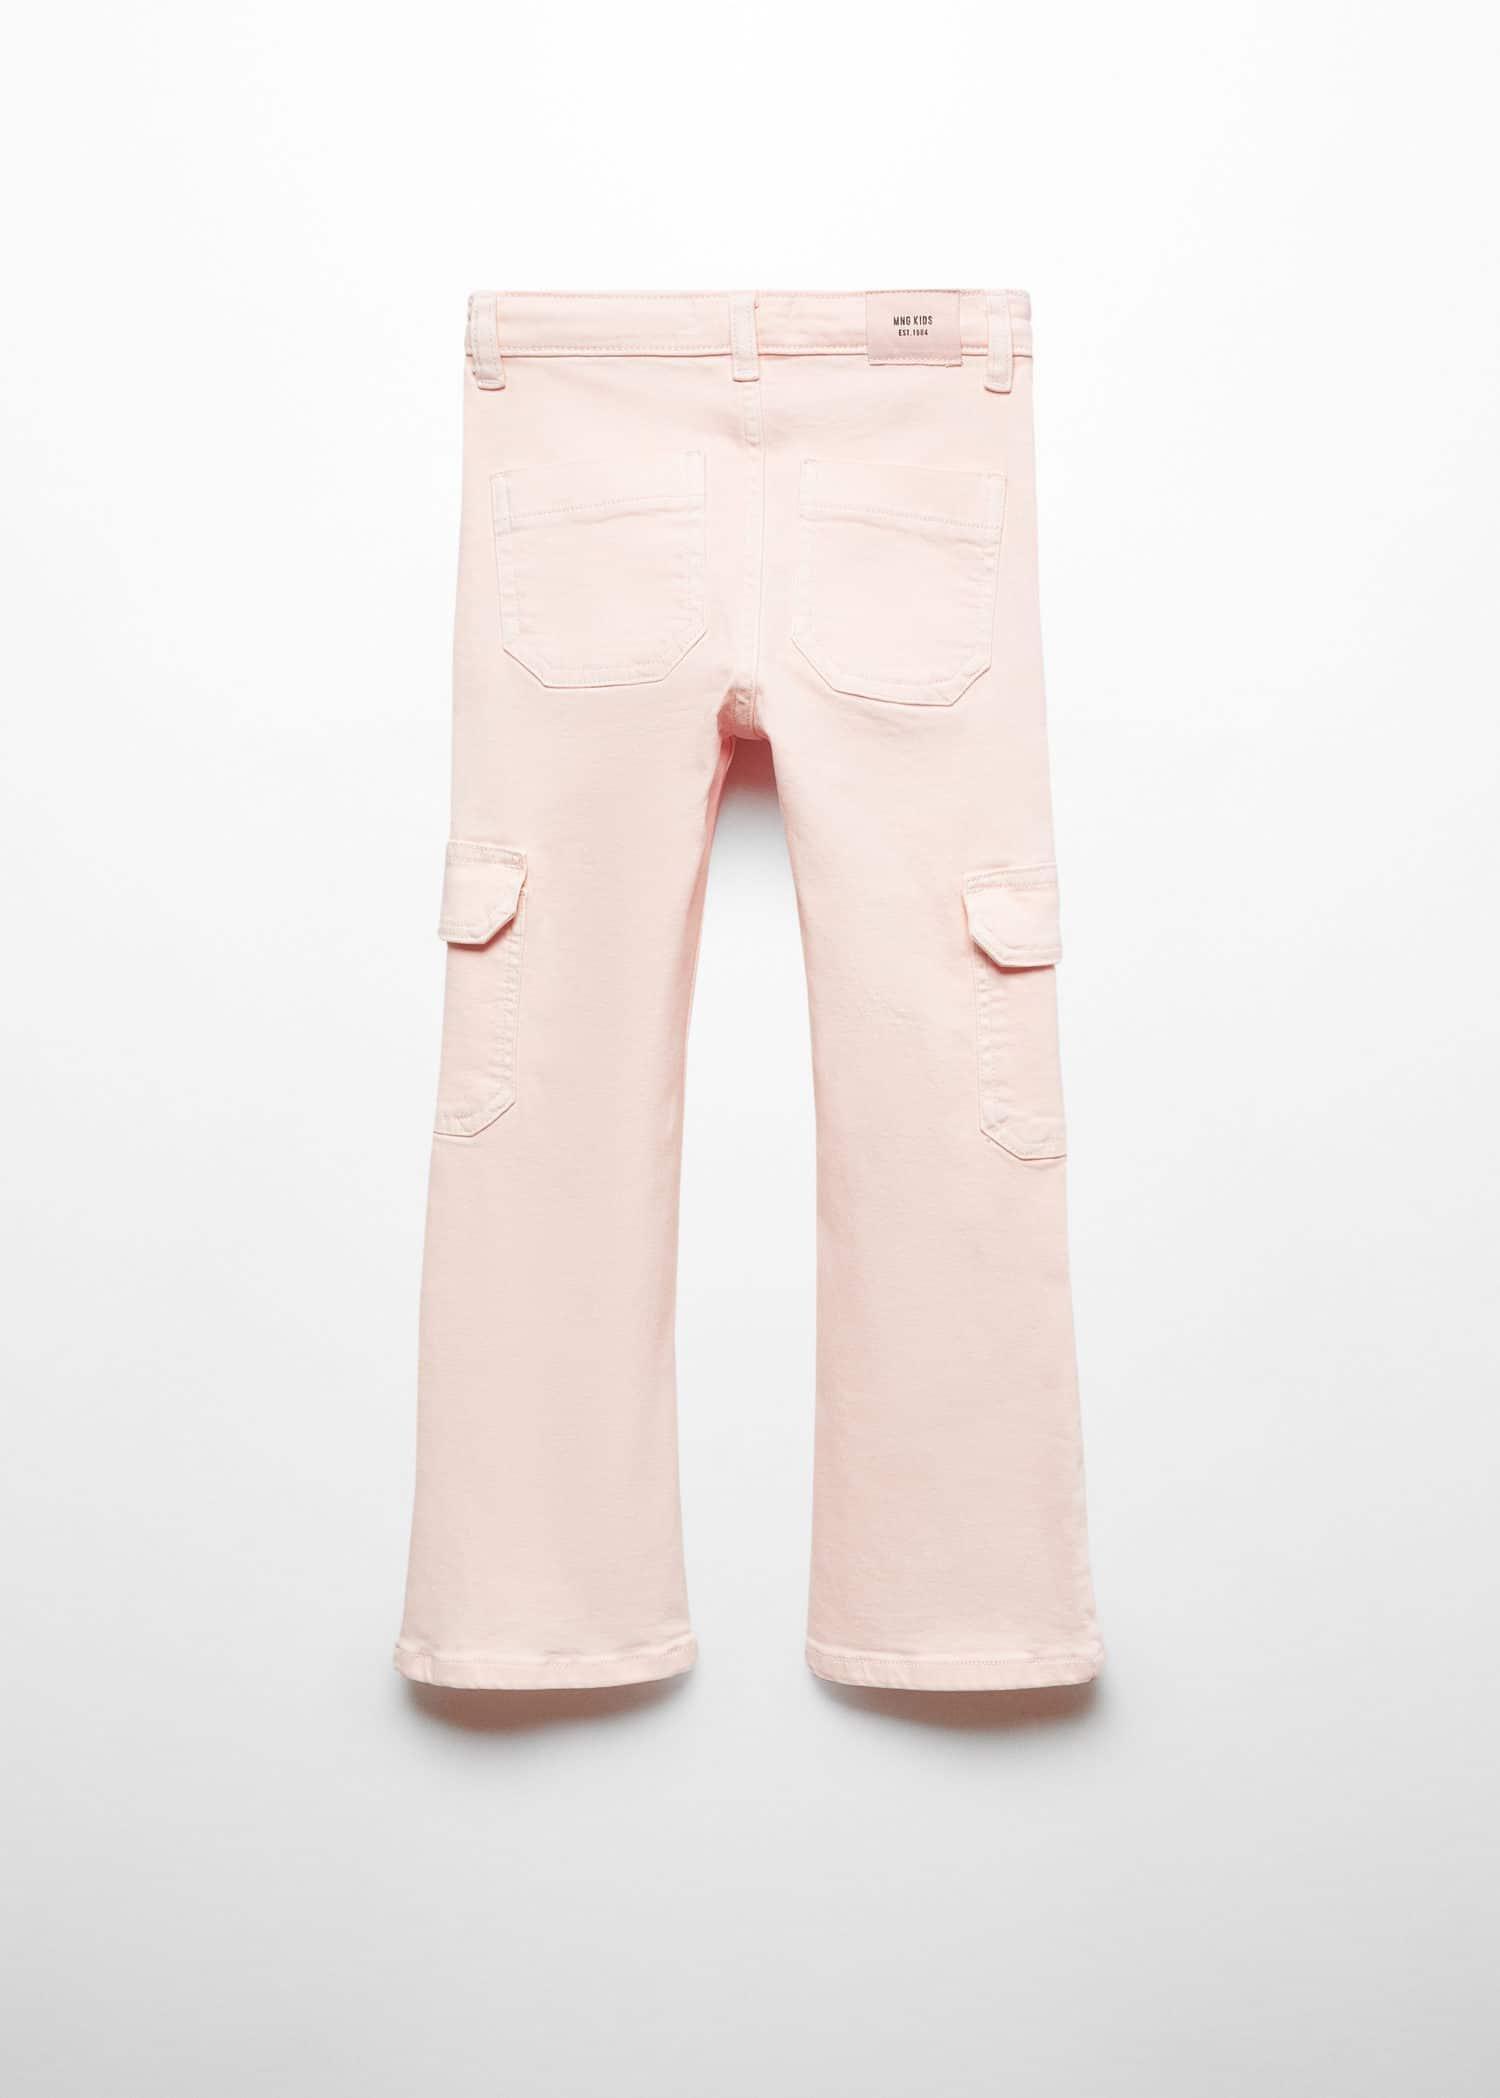 Mango - Pink Lt-Pastel Pocket Cargo Jeans, Kids Girls